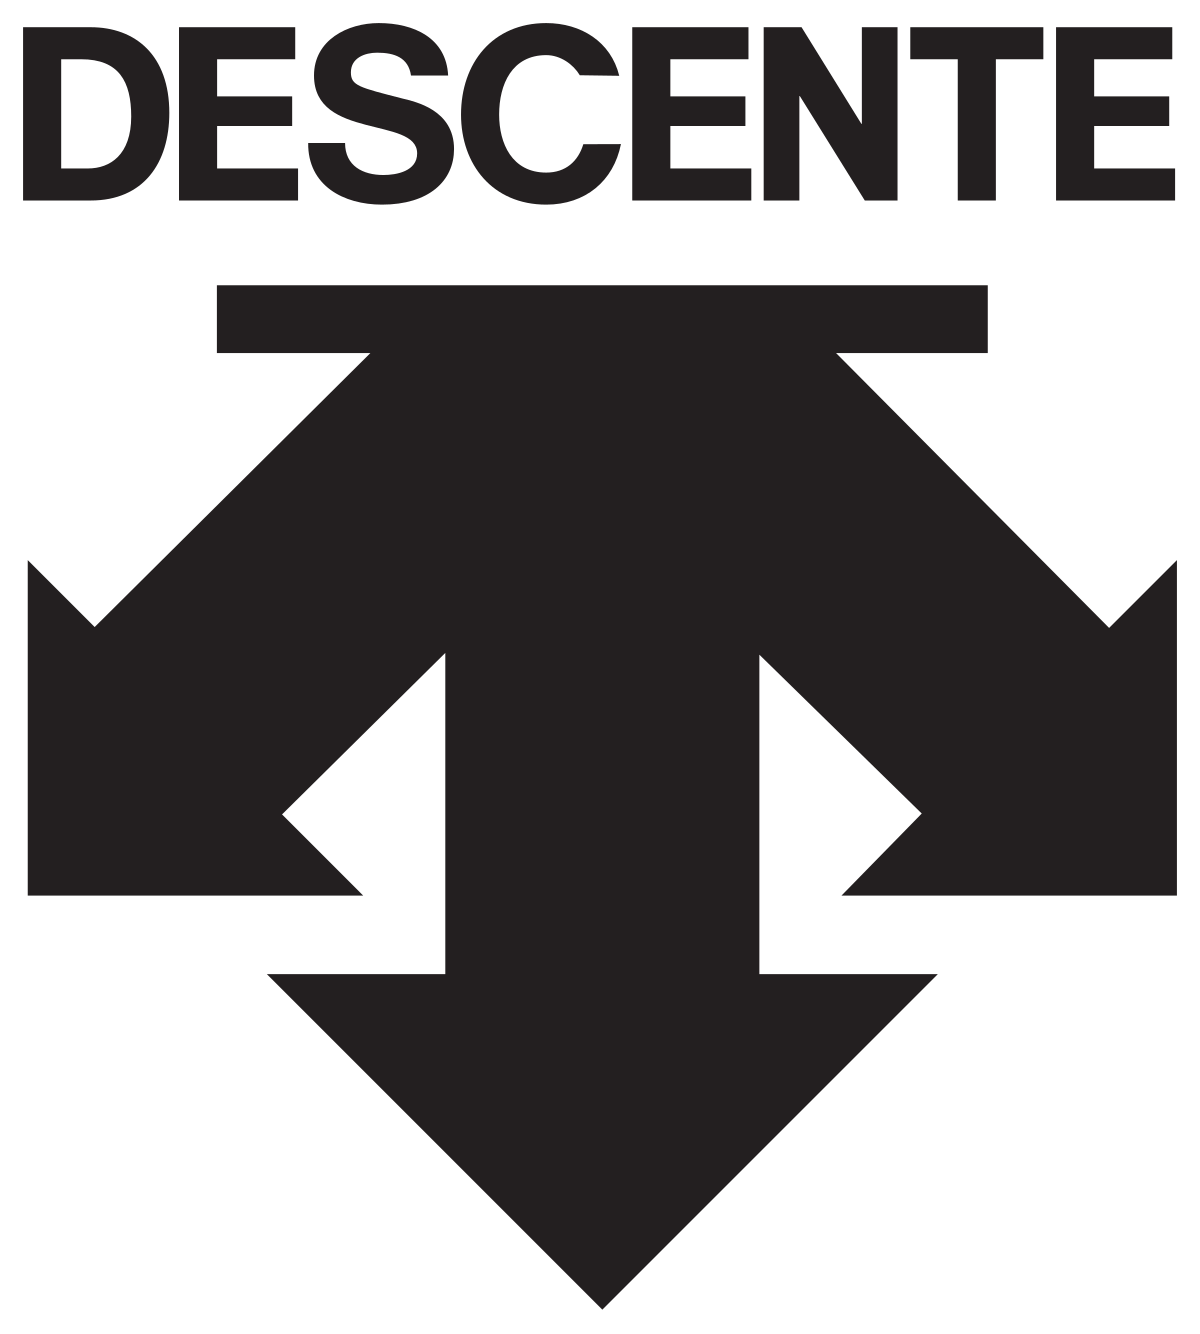 Descente_logo.png